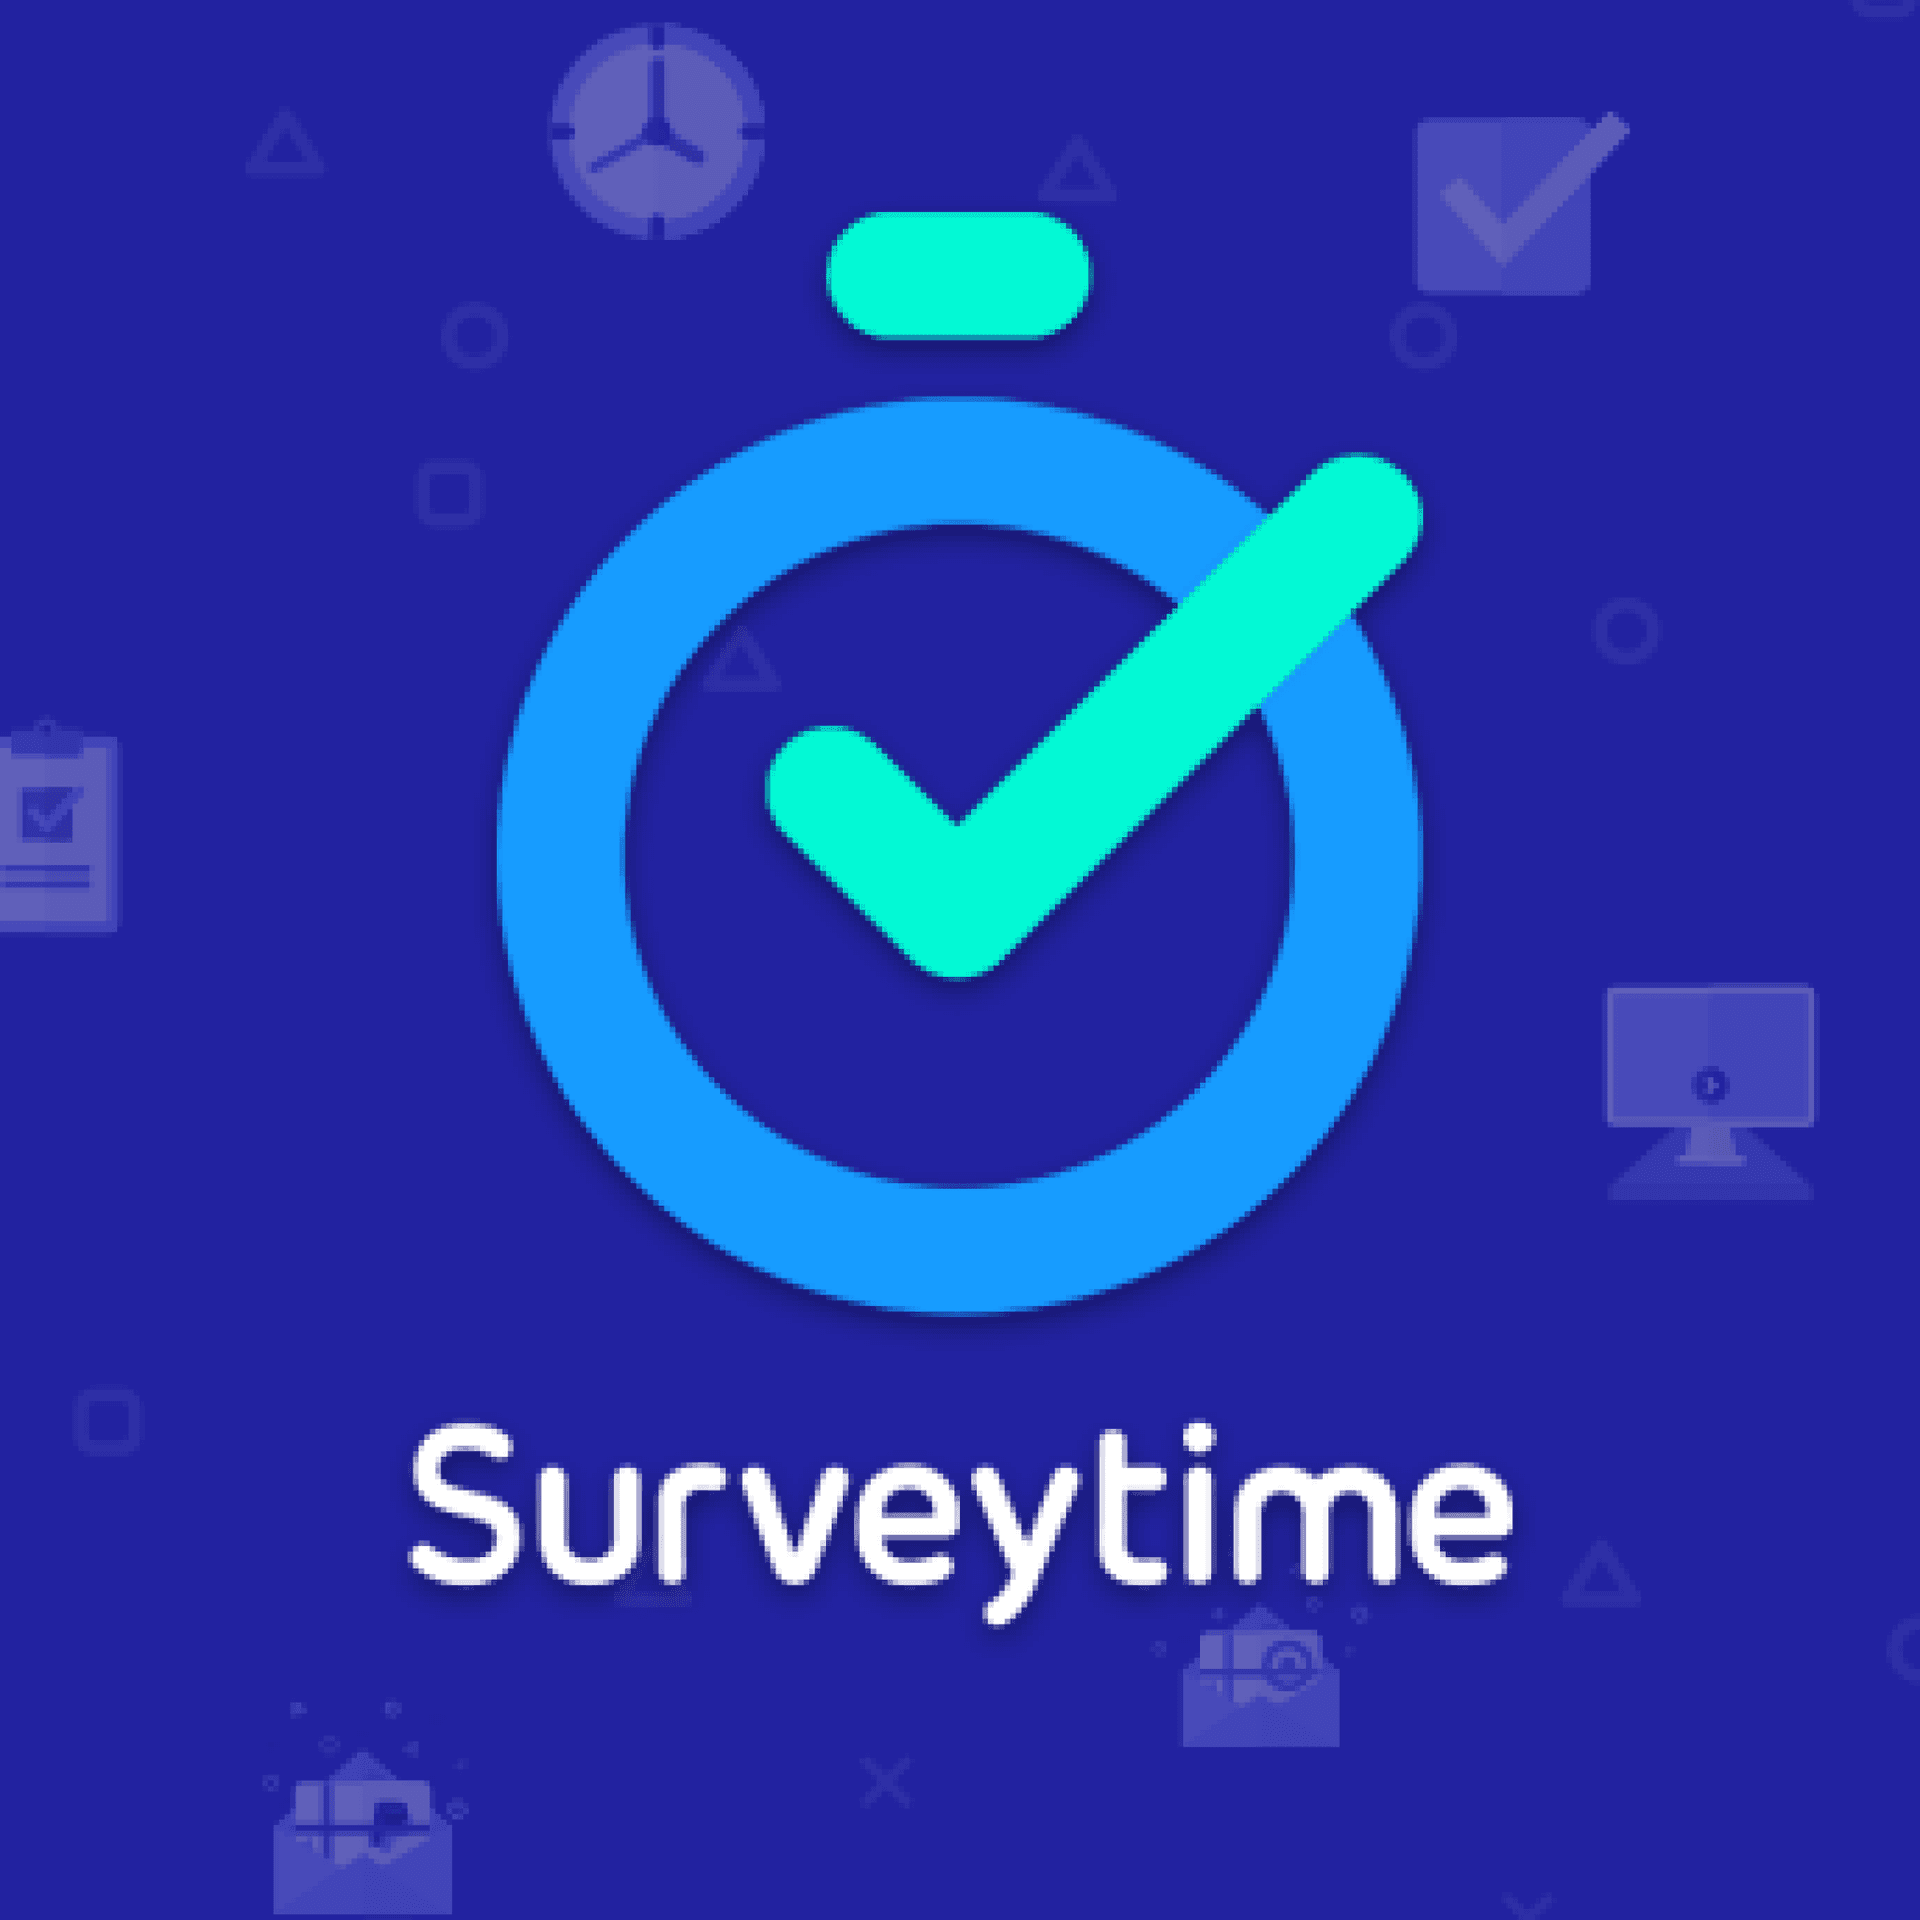 Surveytime logo survey company